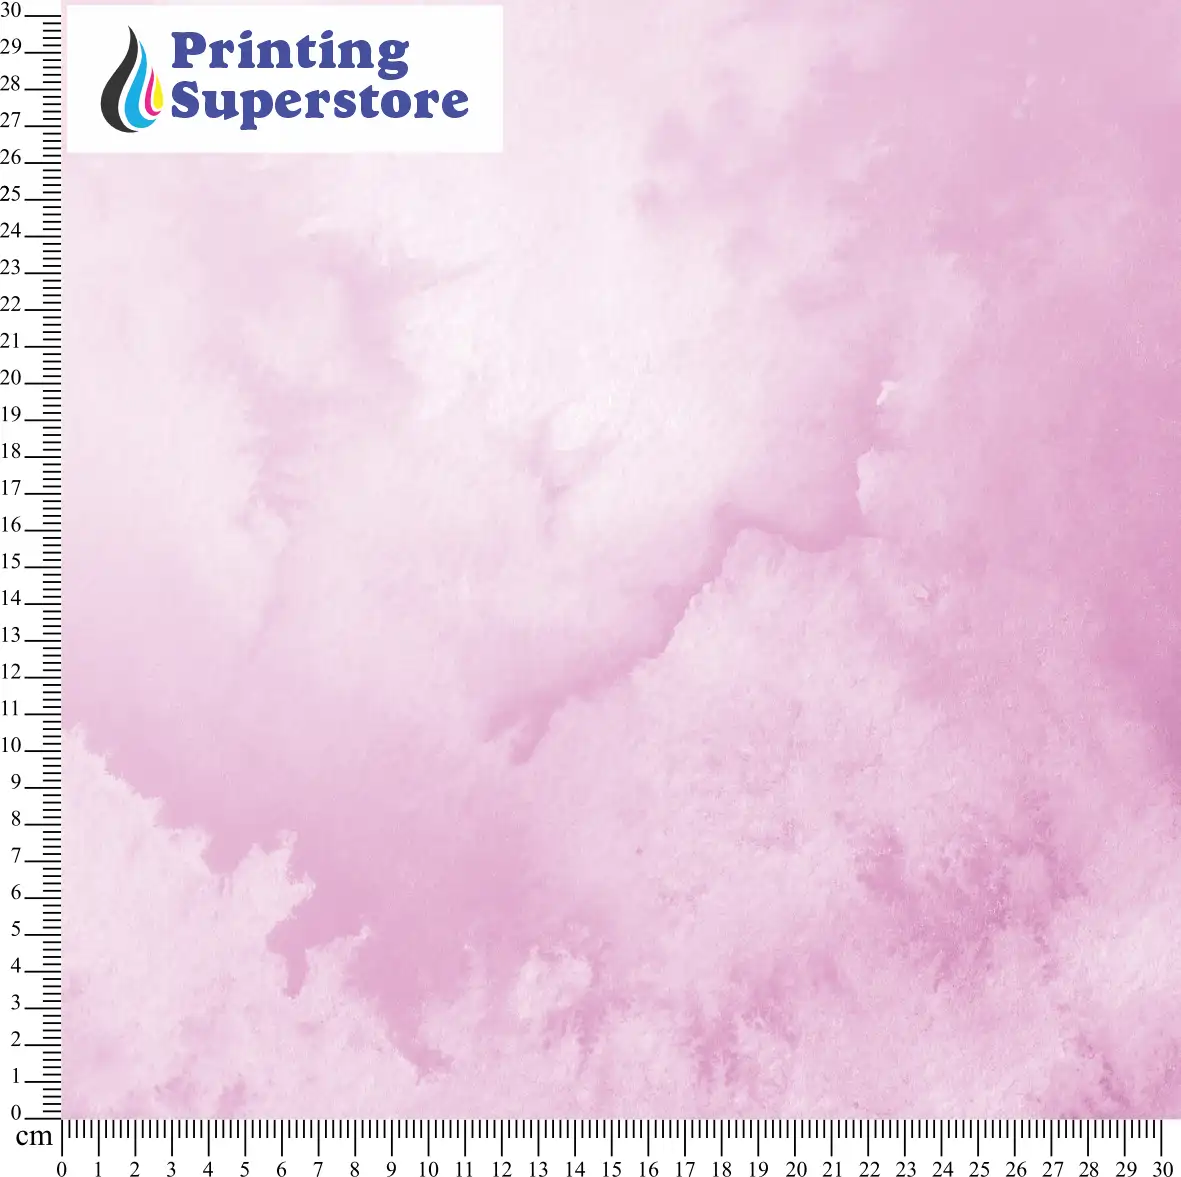 Purple Watercolour theme pattern printed on Self Adhesive Vinyl (SAV), Heat Transfer Vinyl (HTV) and Cardstock.